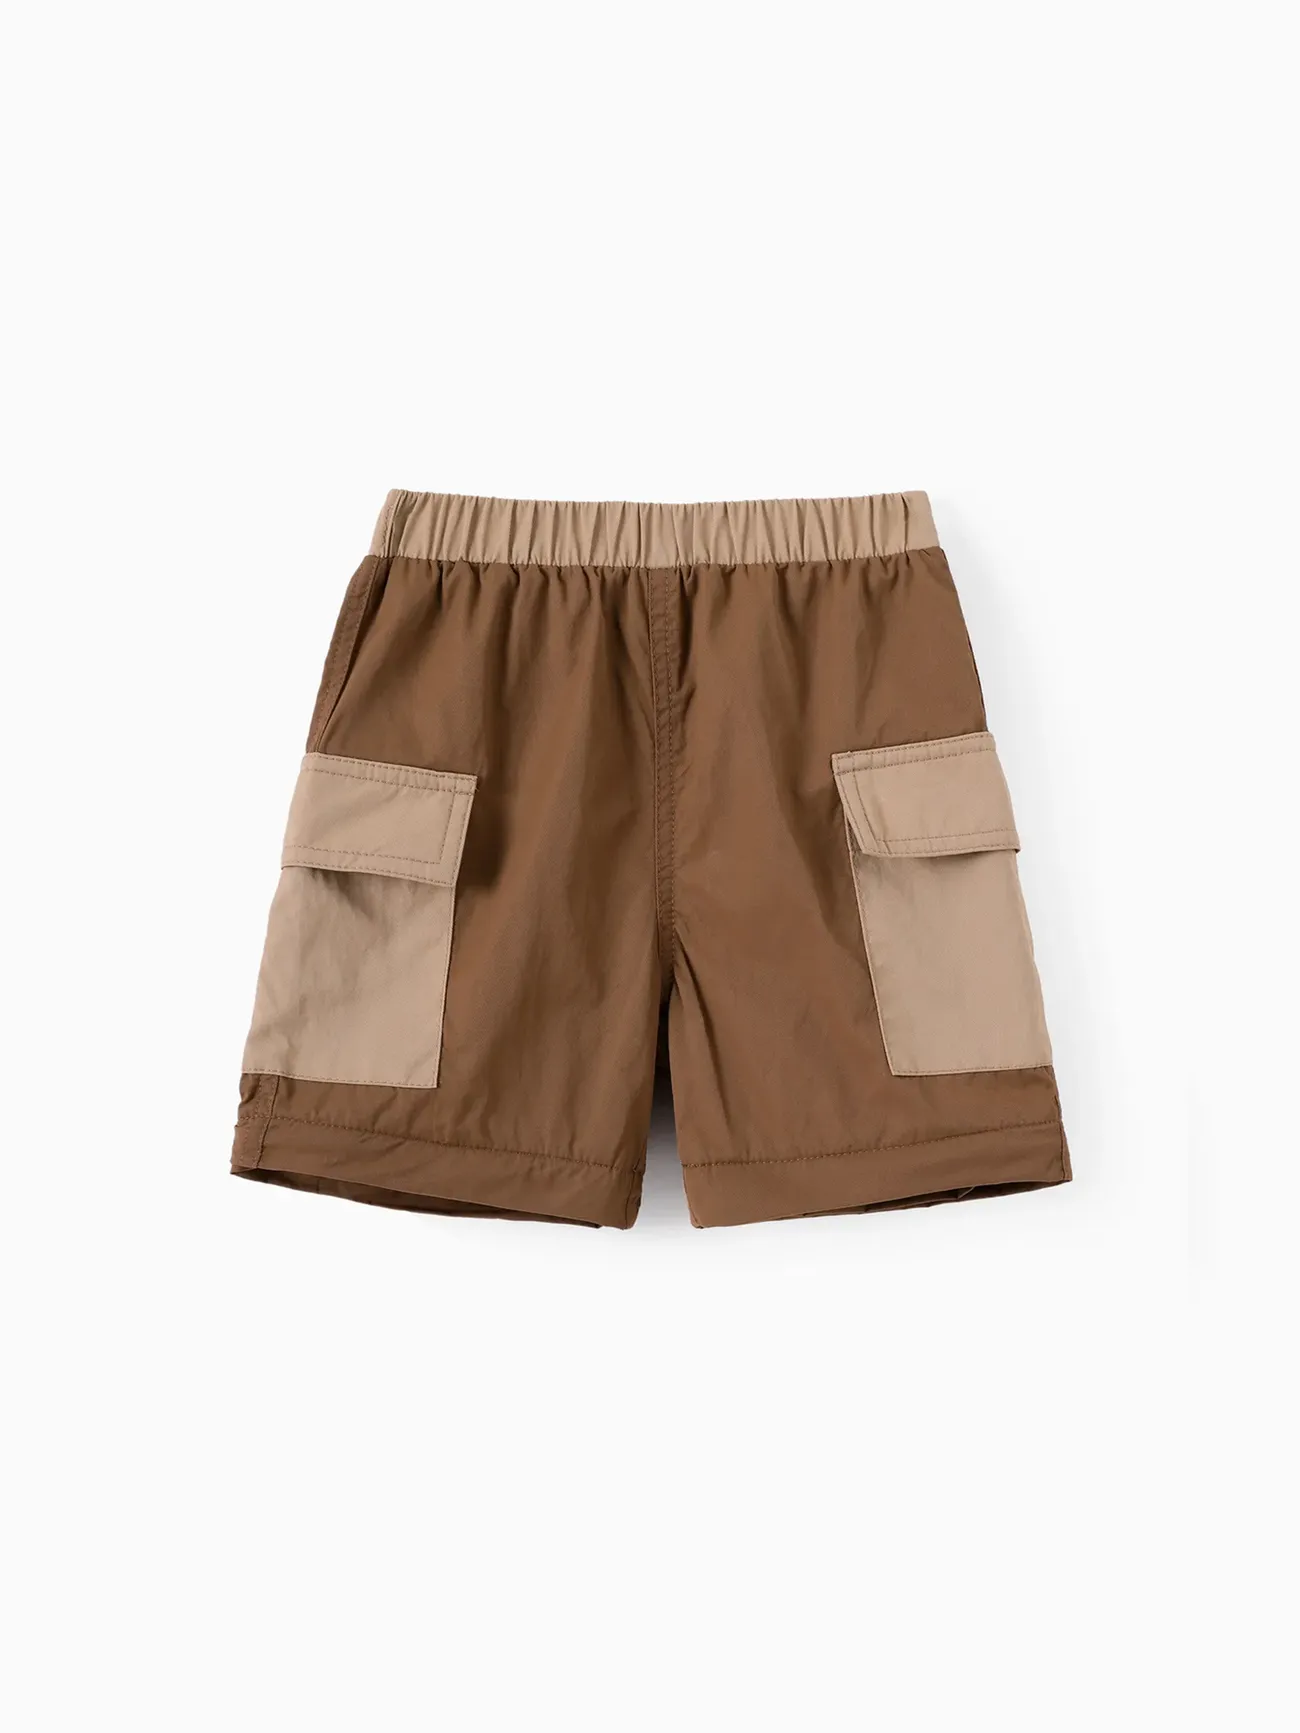 Toddler/Kid Boy 2pcs Letter Print Tee and Dirt-proof Detachable Cargo Pants Set Brown big image 1